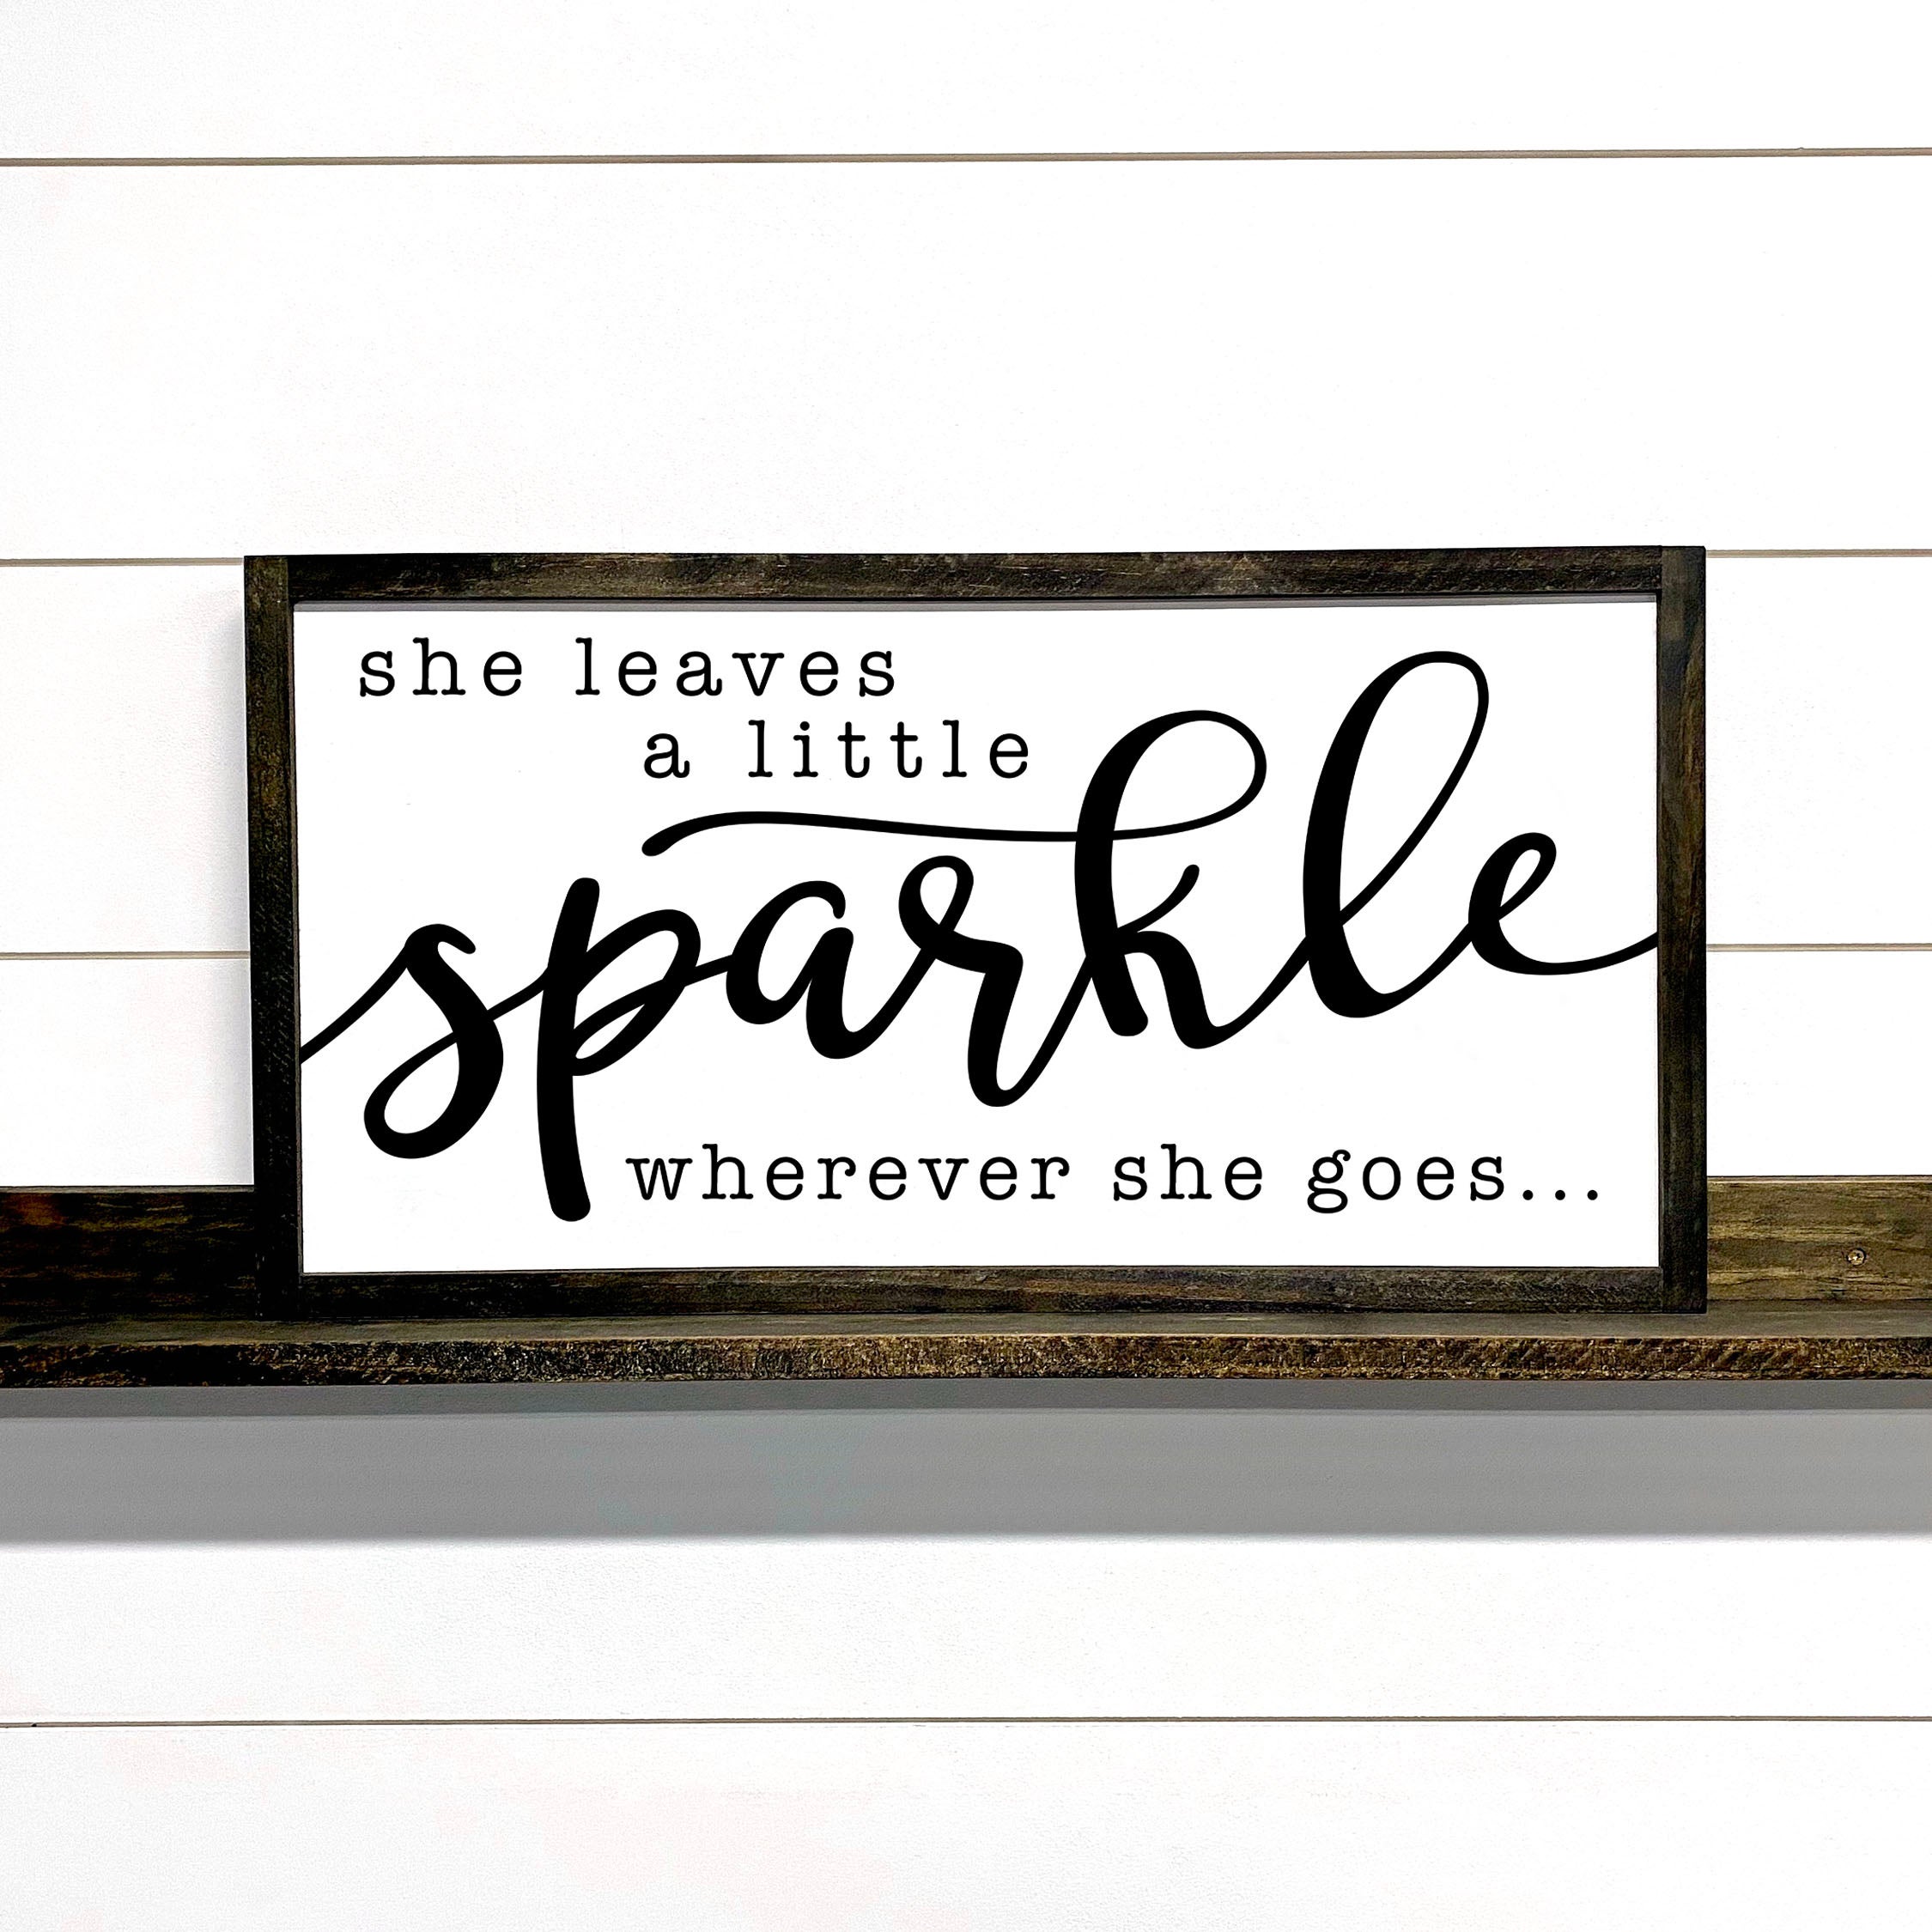 leave a little sparkle wherever you go printable